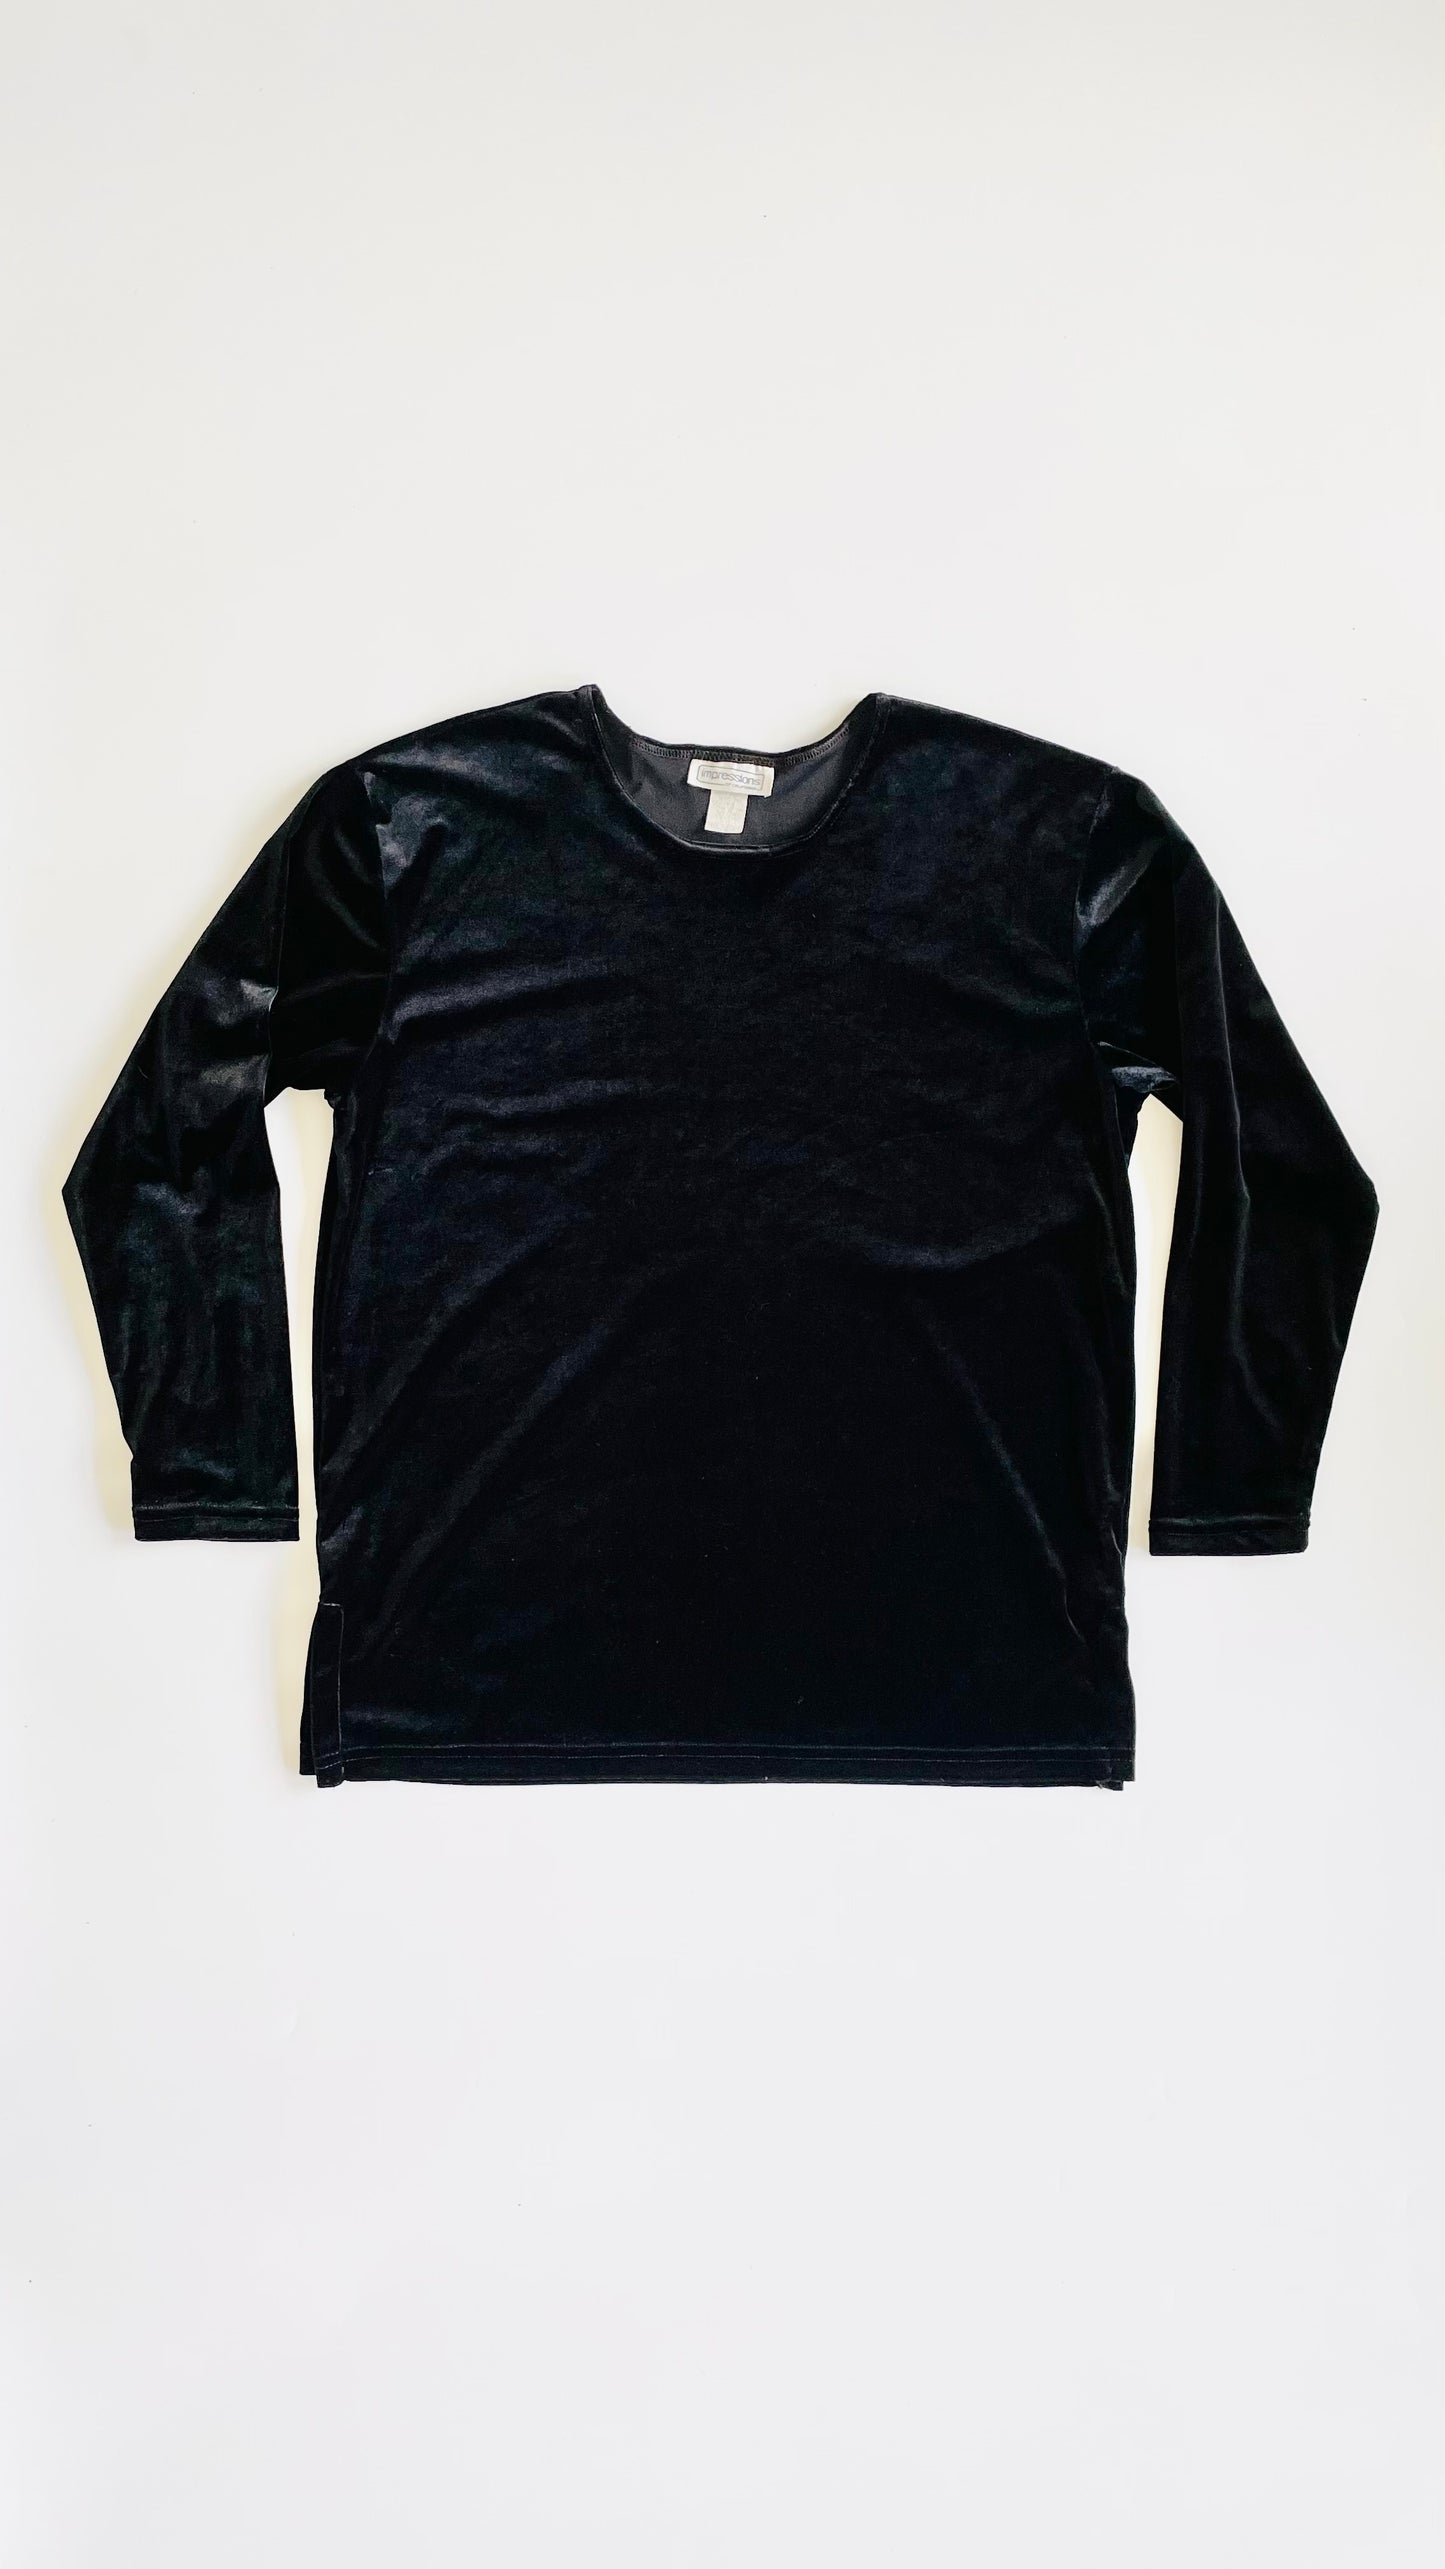 Vintage 90s black velvet knit tunic - Size M